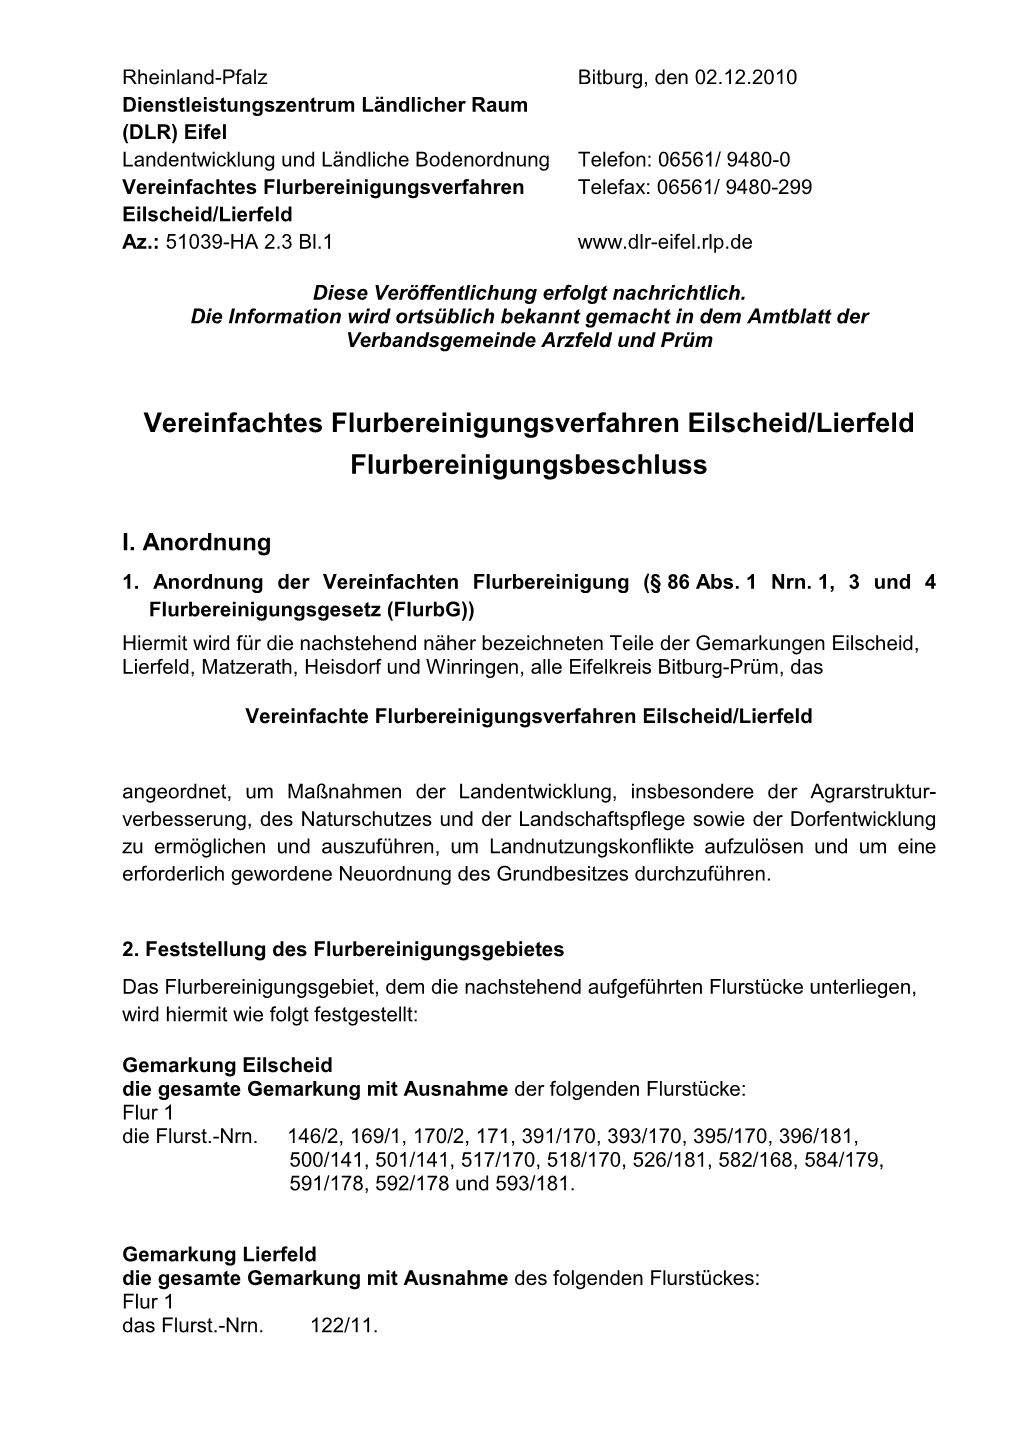 Vereinfachtes Flurbereinigungsverfahren Telefax: 06561/ 9480-299 Eilscheid/Lierfeld Az.: 51039-HA 2.3 Bl.1